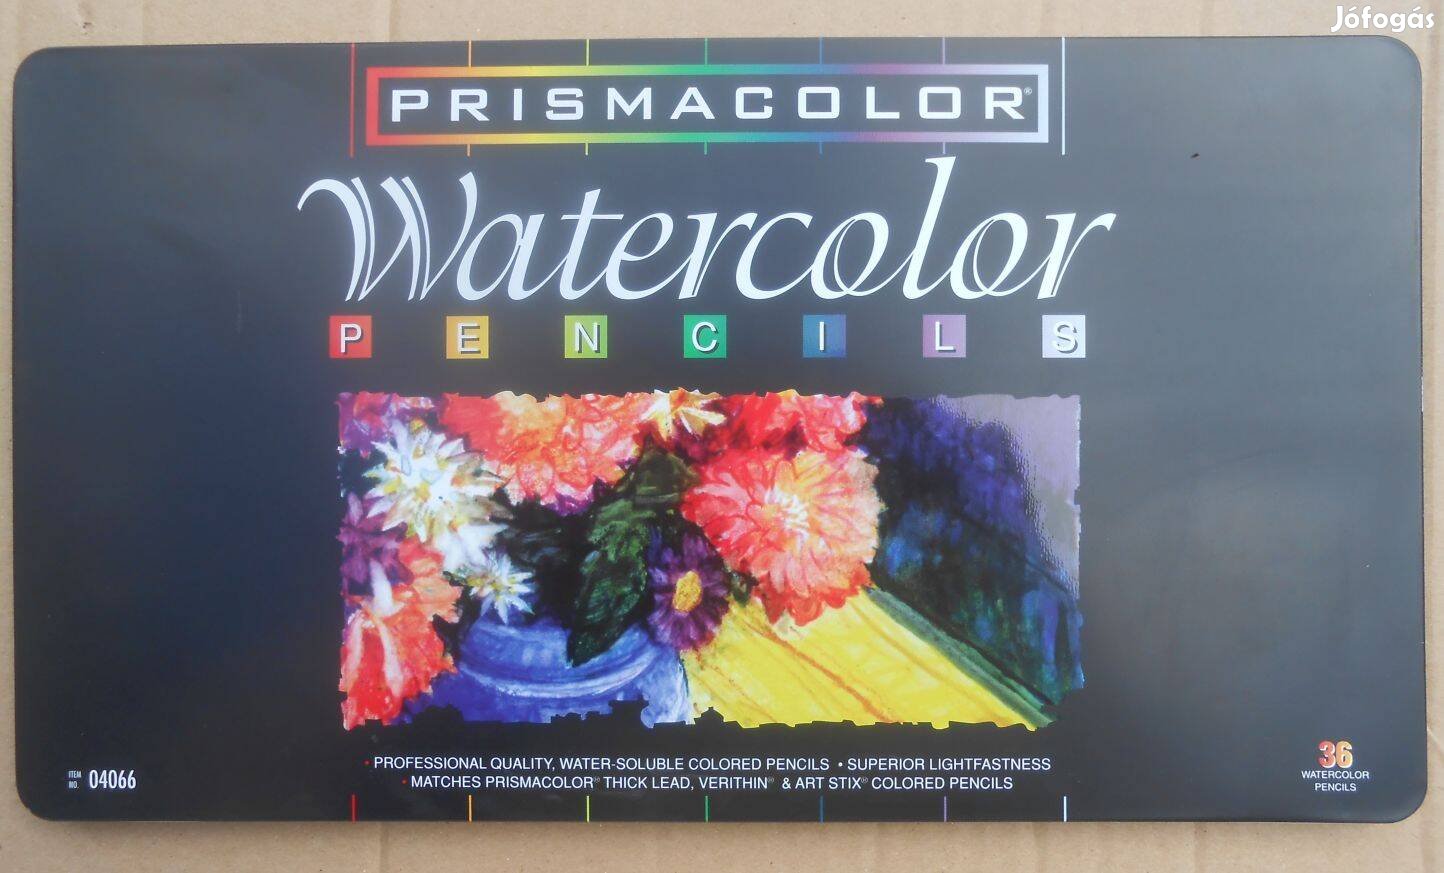 Prismacolor Watercolor szines ceruza (36-os készlet)(profi minoseg) Új